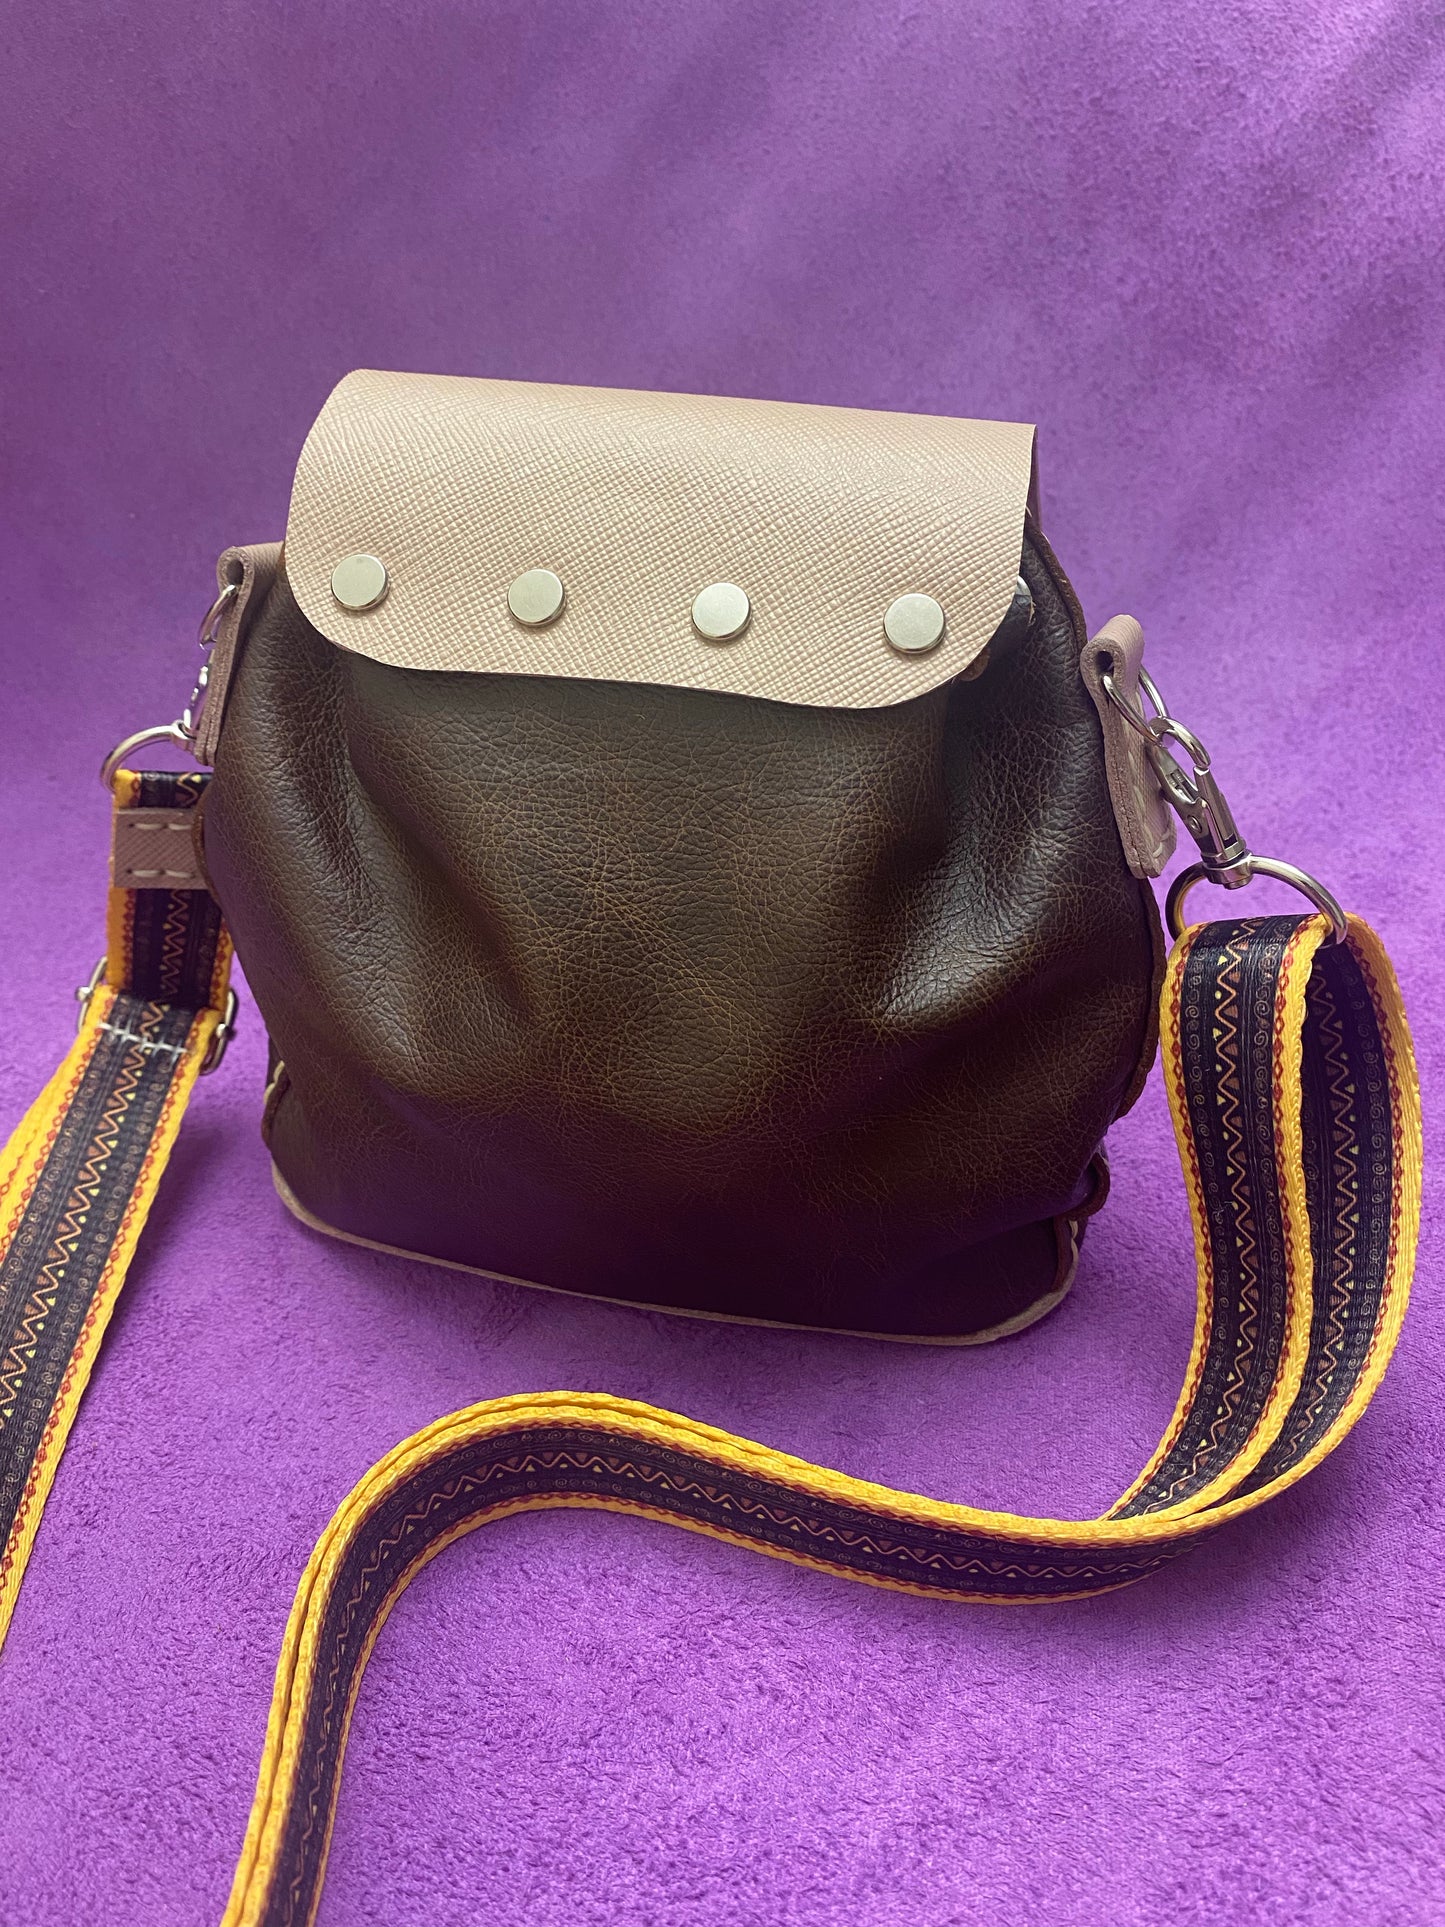 Handmade Leather Bag